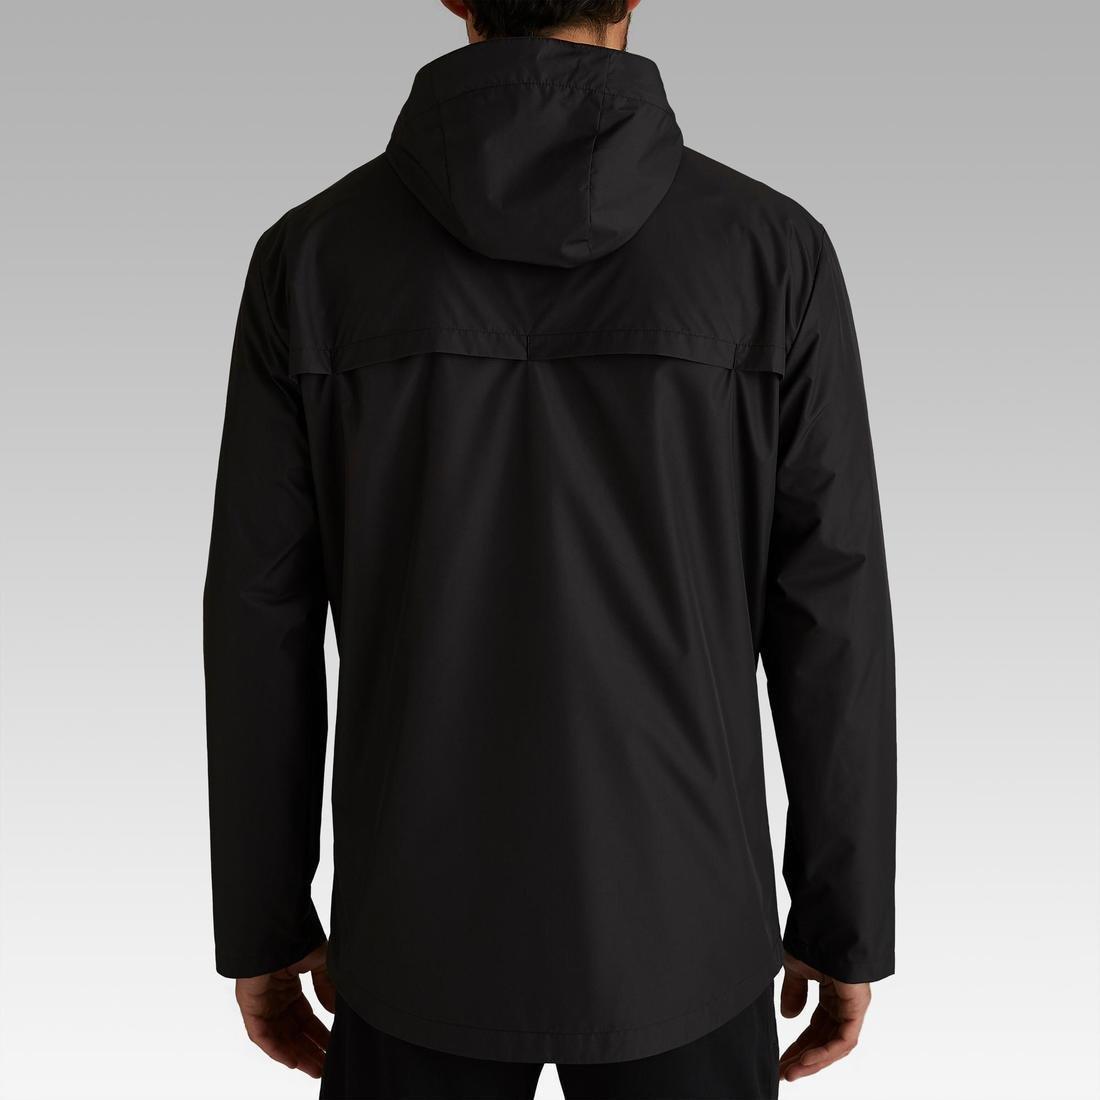 KIPSTA - Men Football Waterproof Jacket-T100, Black